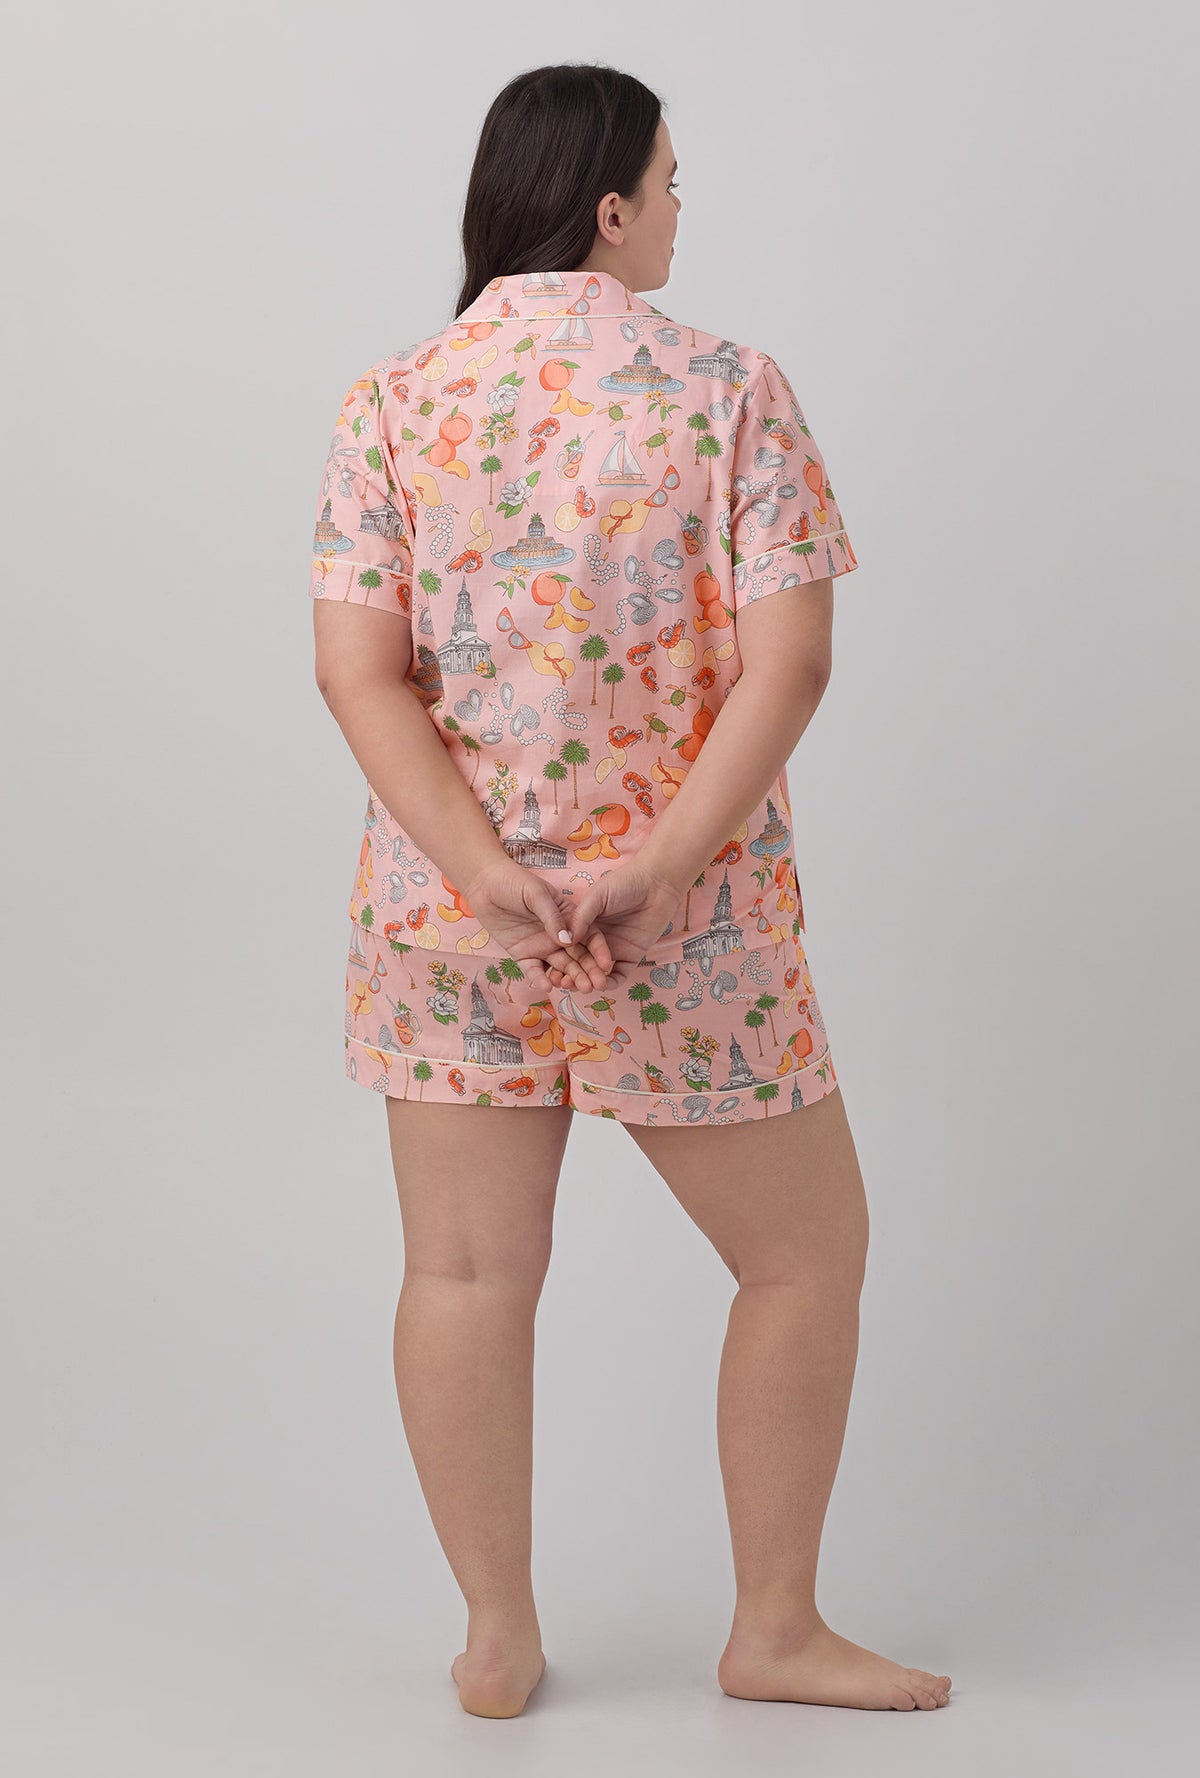 A lady wearing Short Sleeve Classic Shorty Woven Cotton Poplin PJ Set with charming charleston print